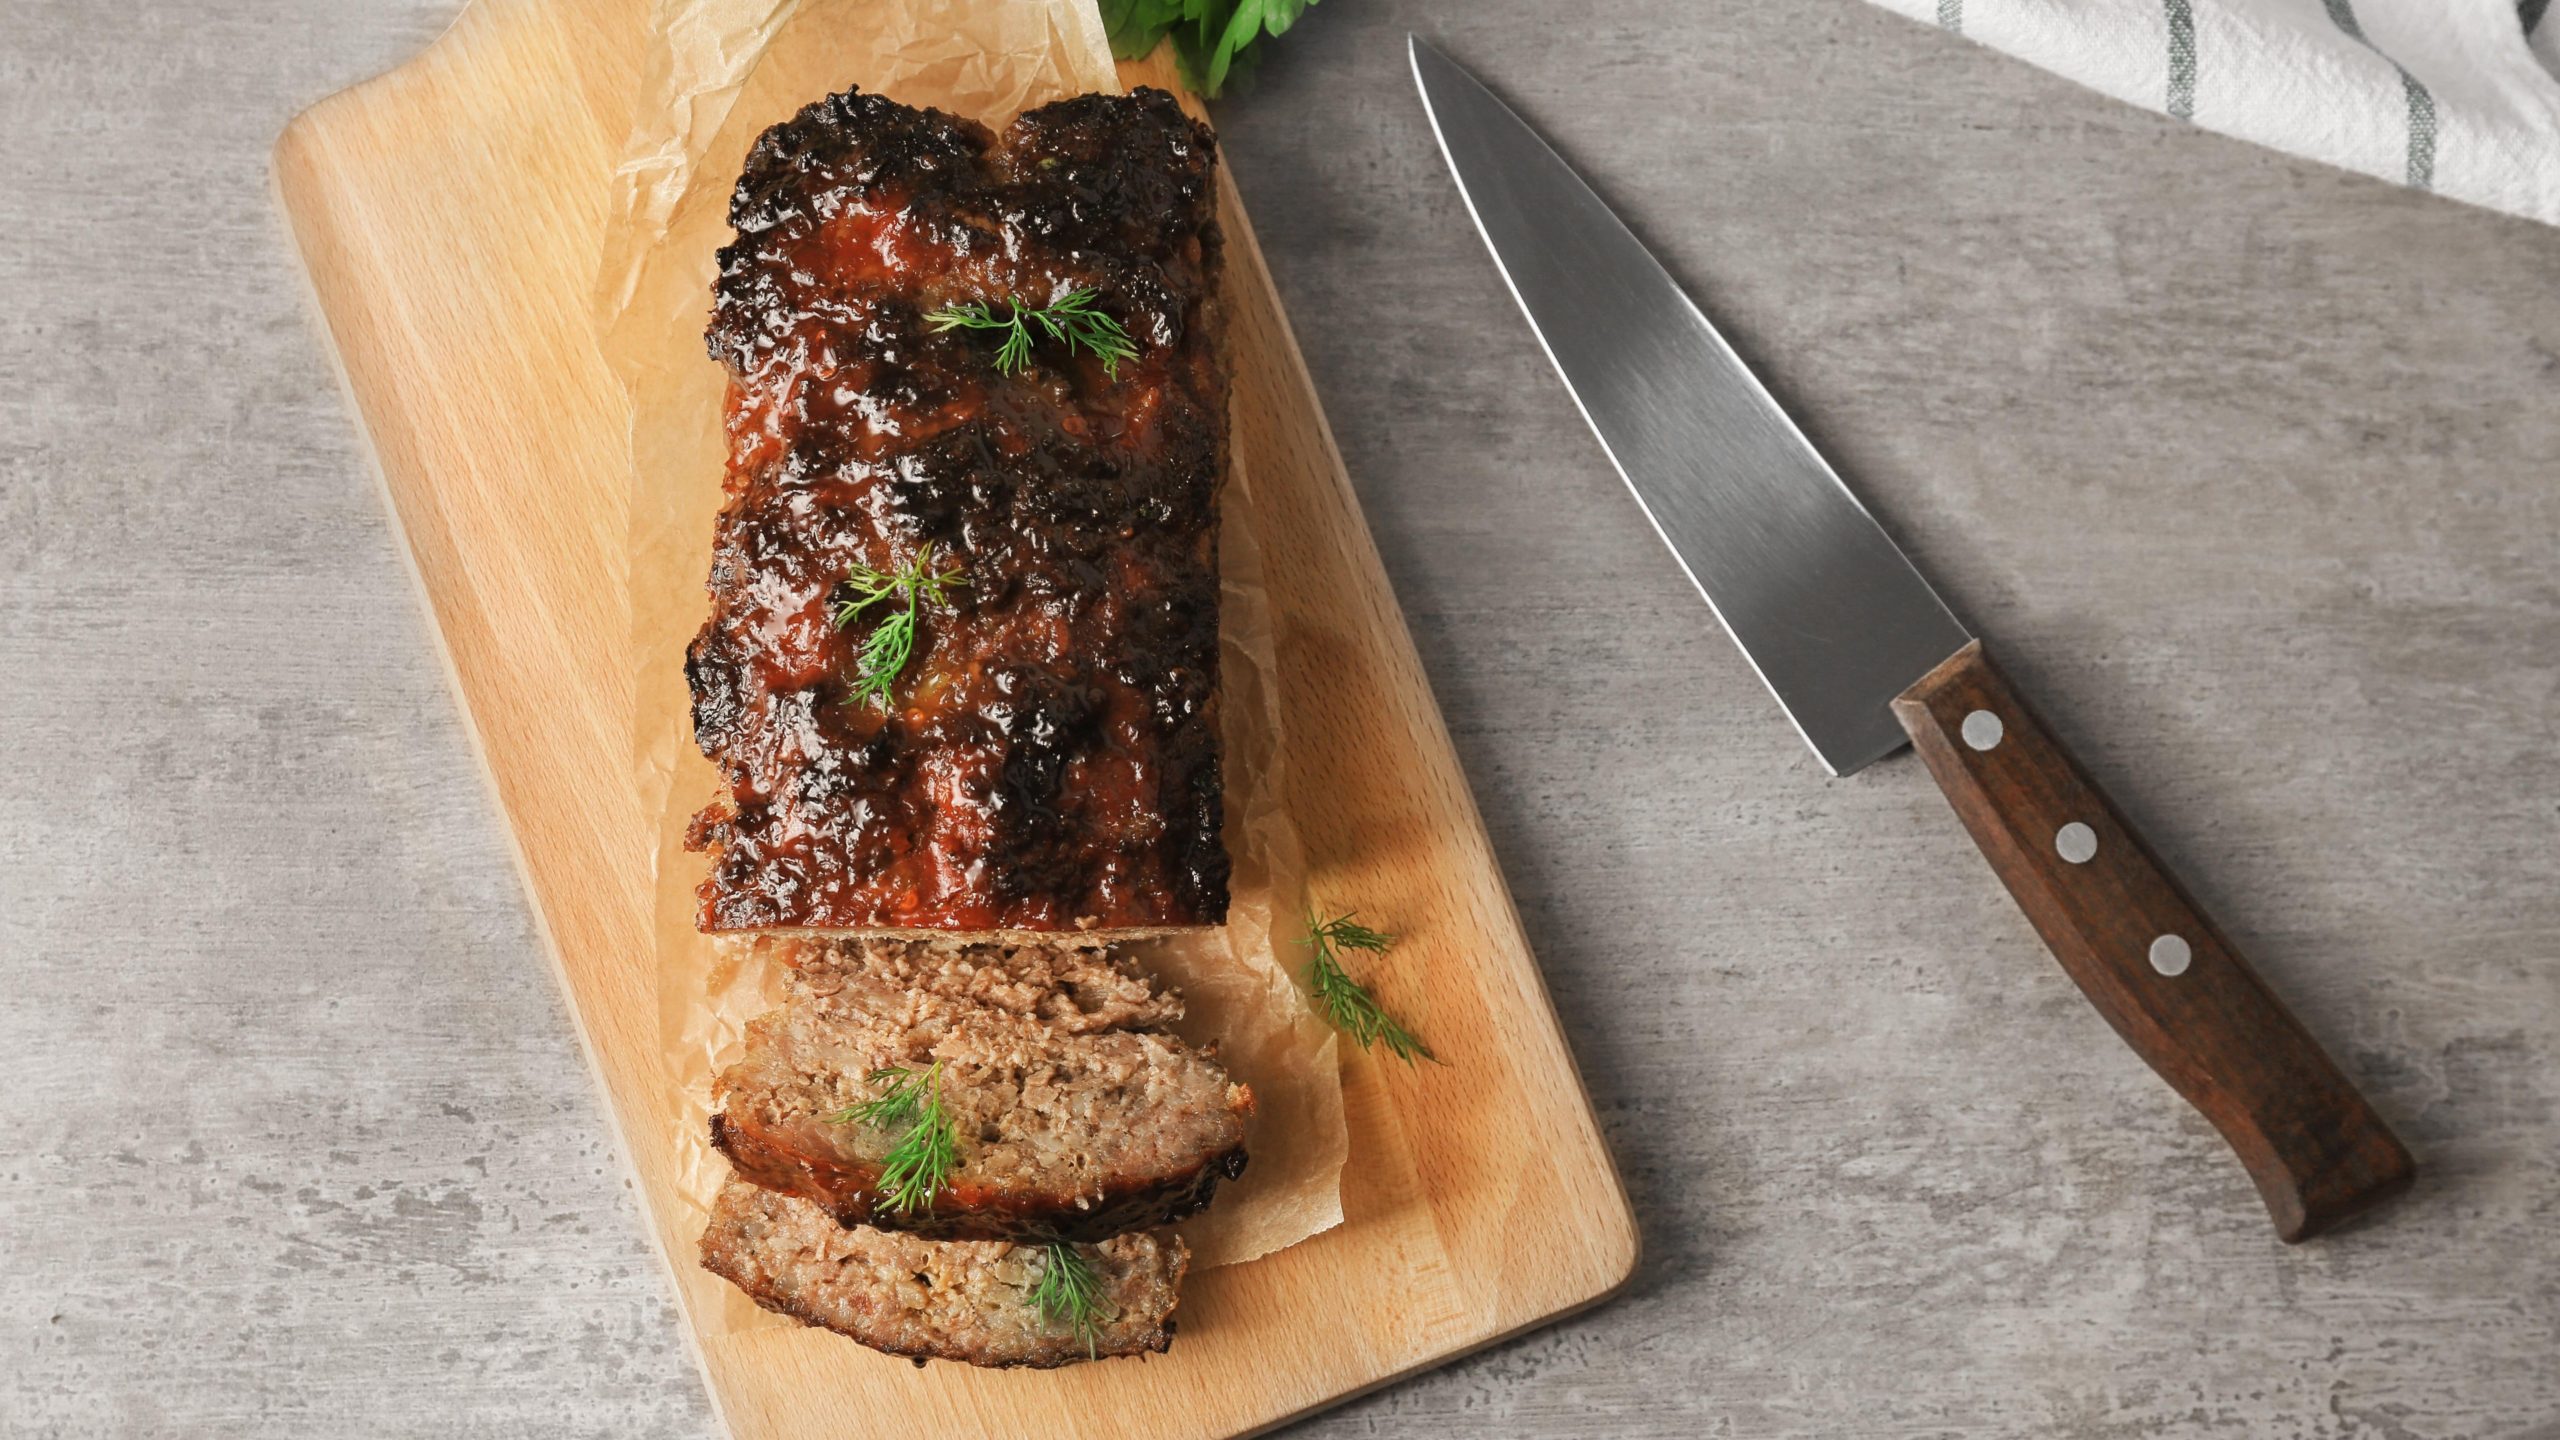 How to Season Ground Meat ‘to Taste’